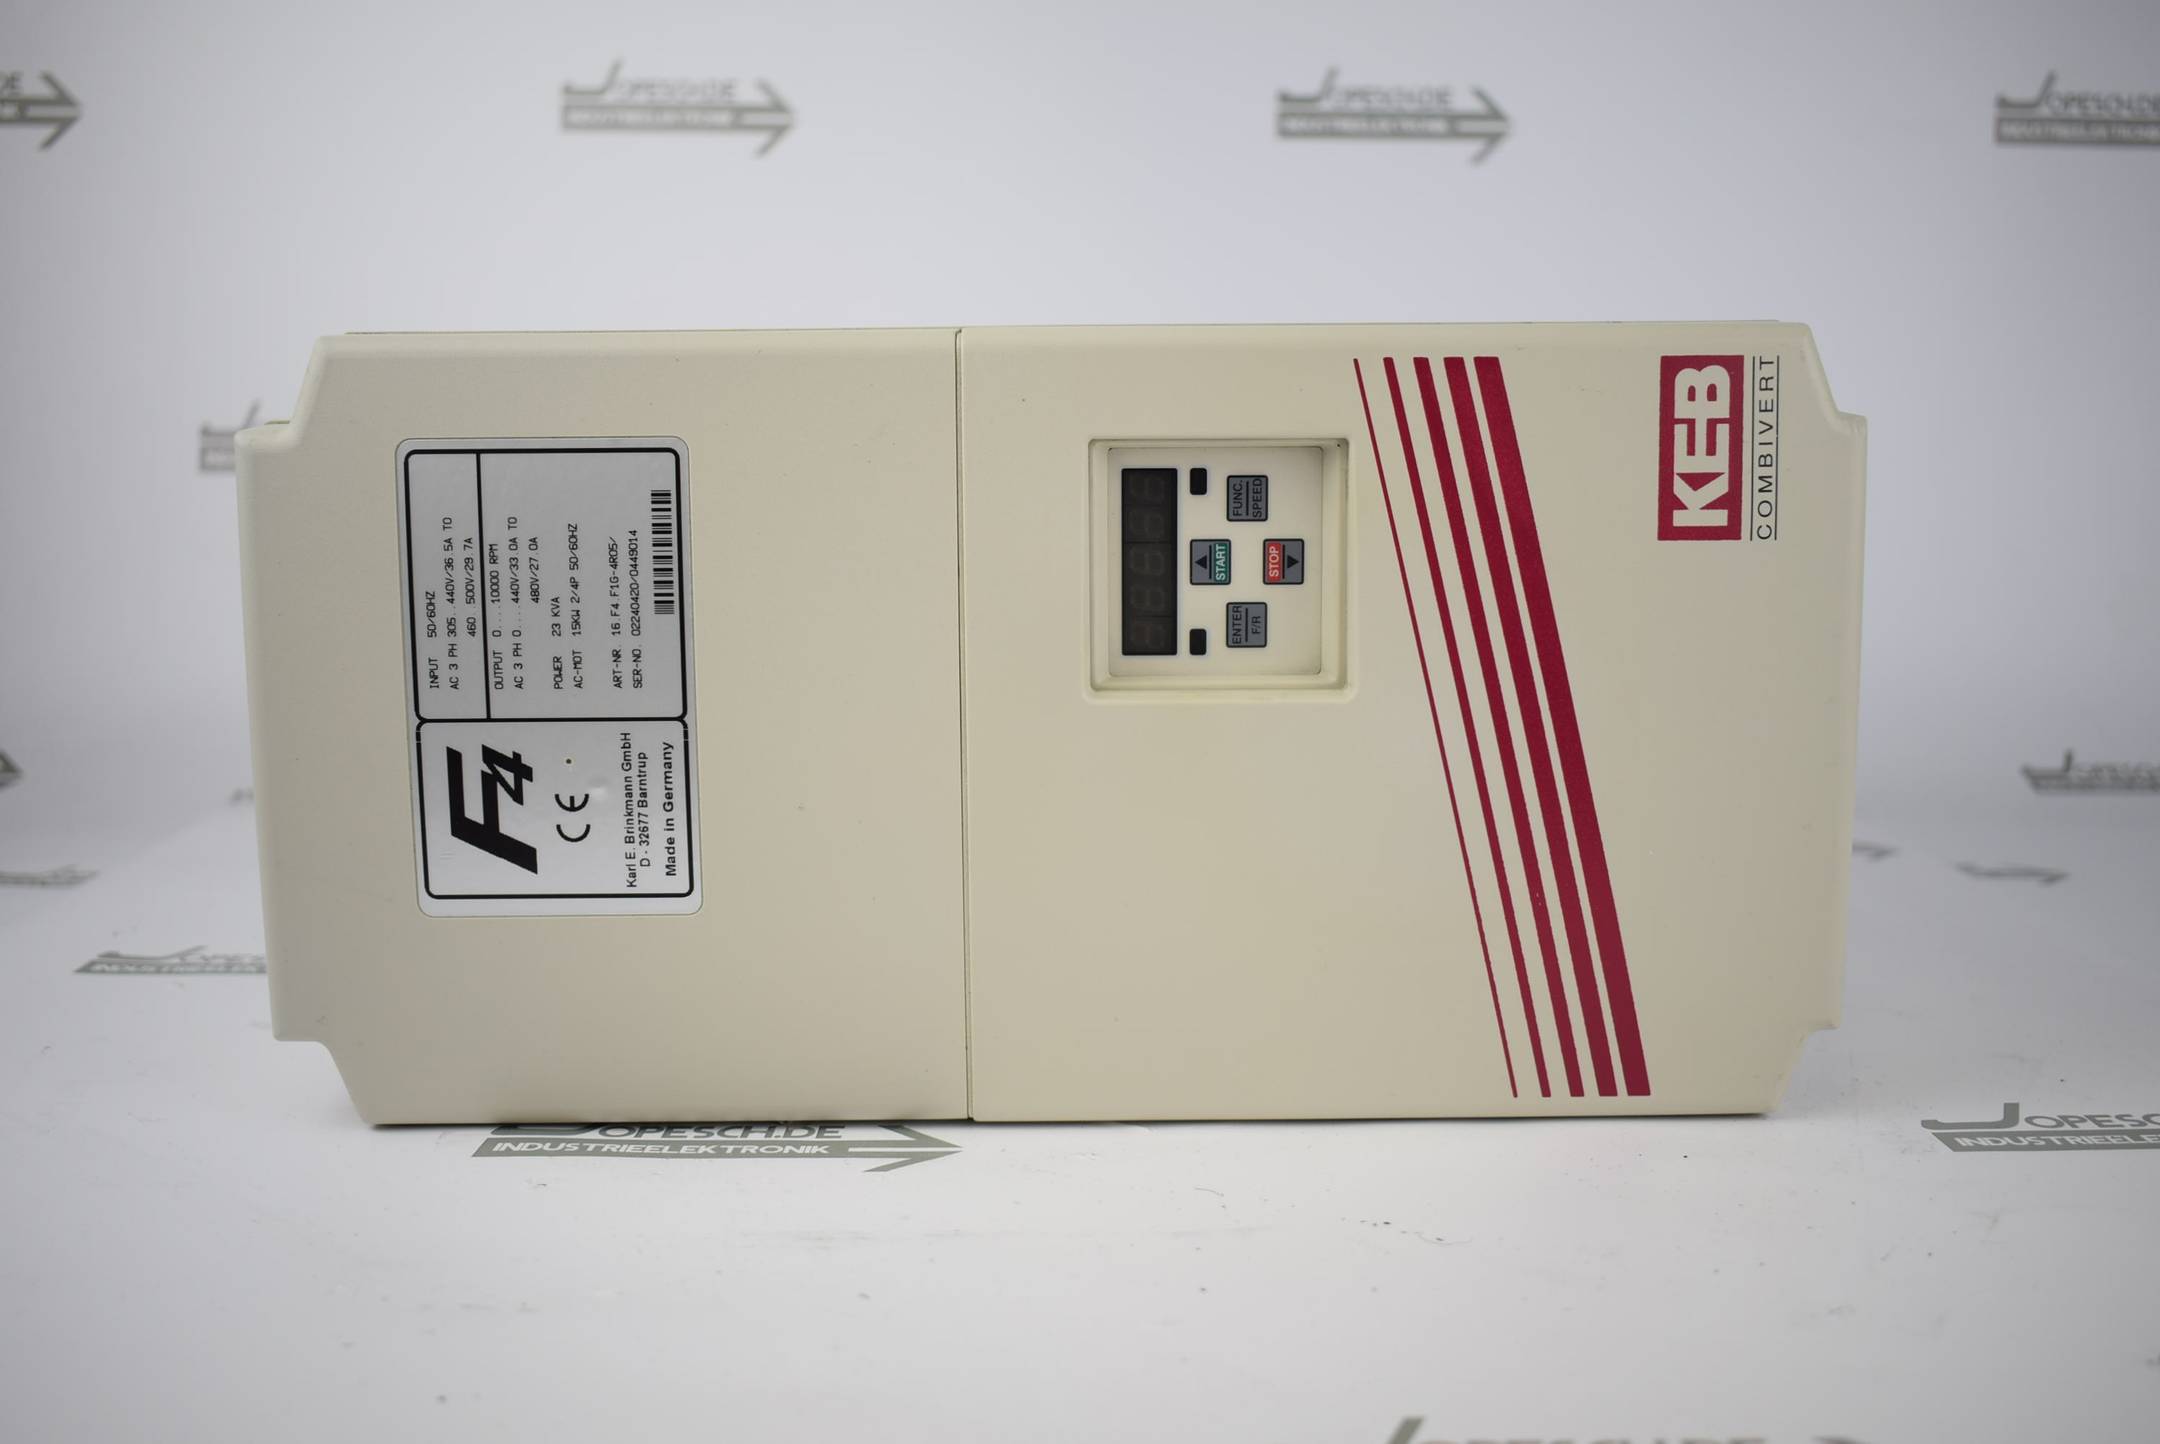 KEB Combivert F4 Drive Frequenzumrichter 16F4F1G-4R05 ( 16.F4.F1G-4R05 )